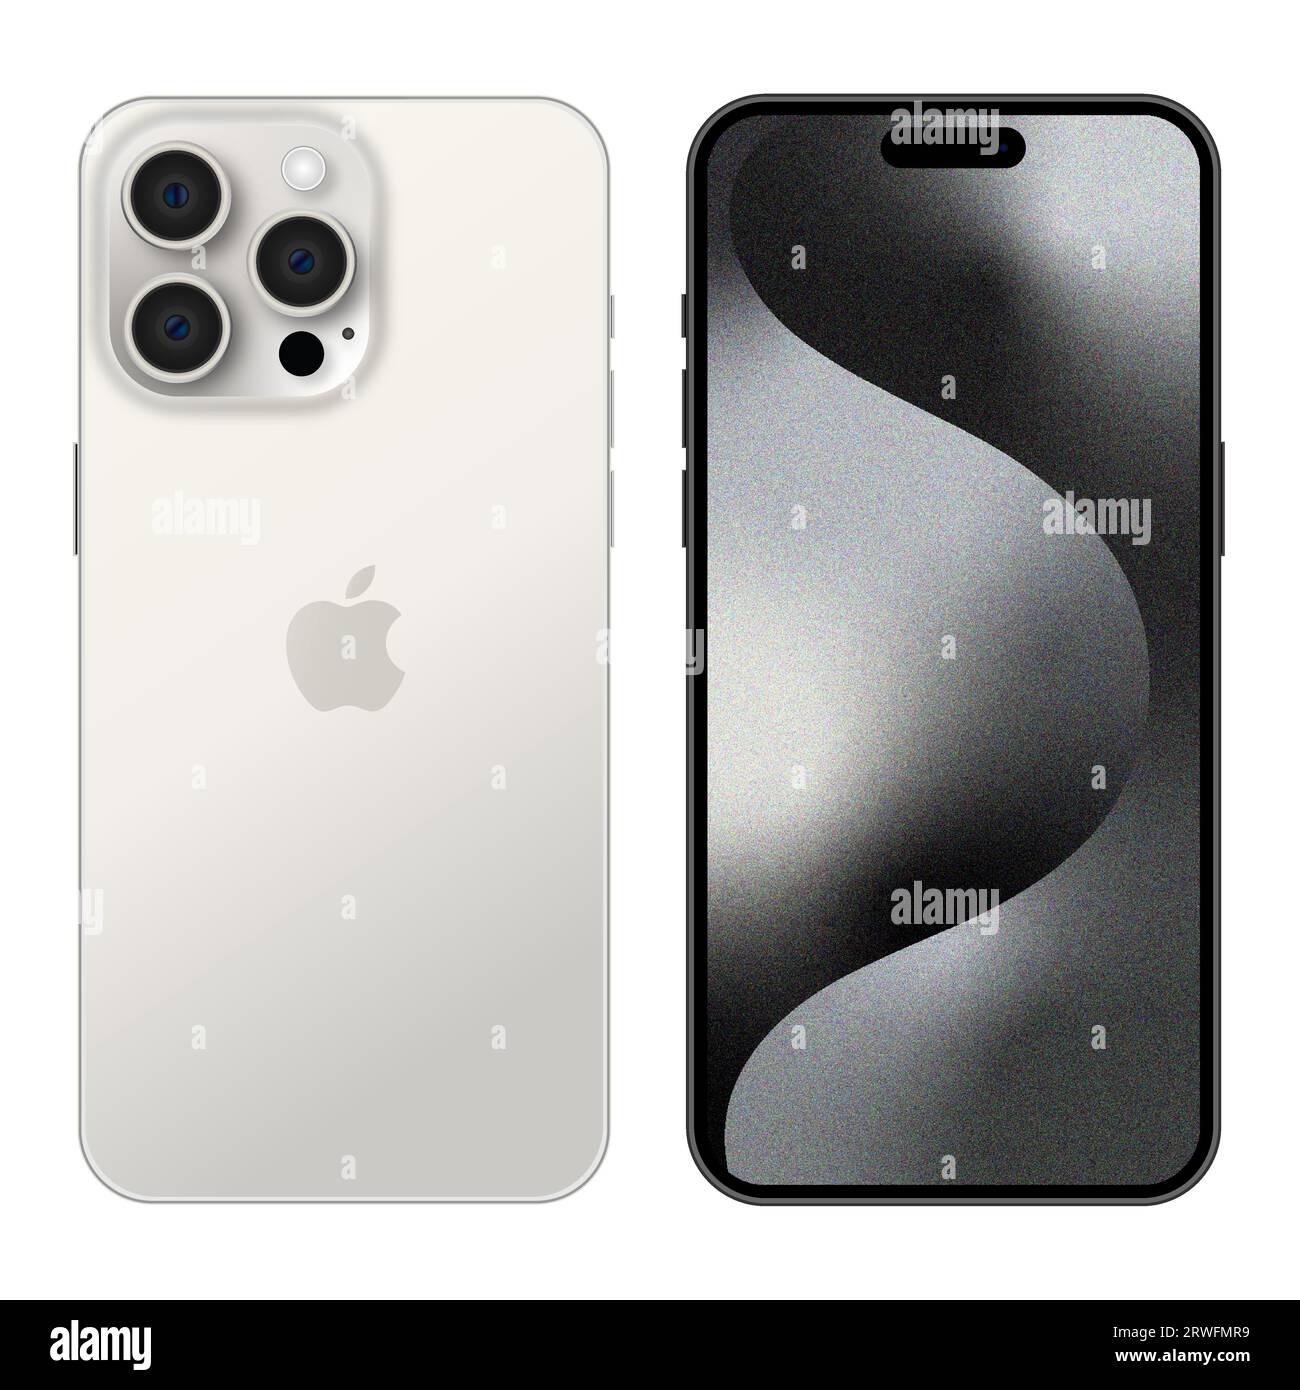 iPhone 15 + 15 Pro Series MEGA UNBOXING! - GadgetMatch